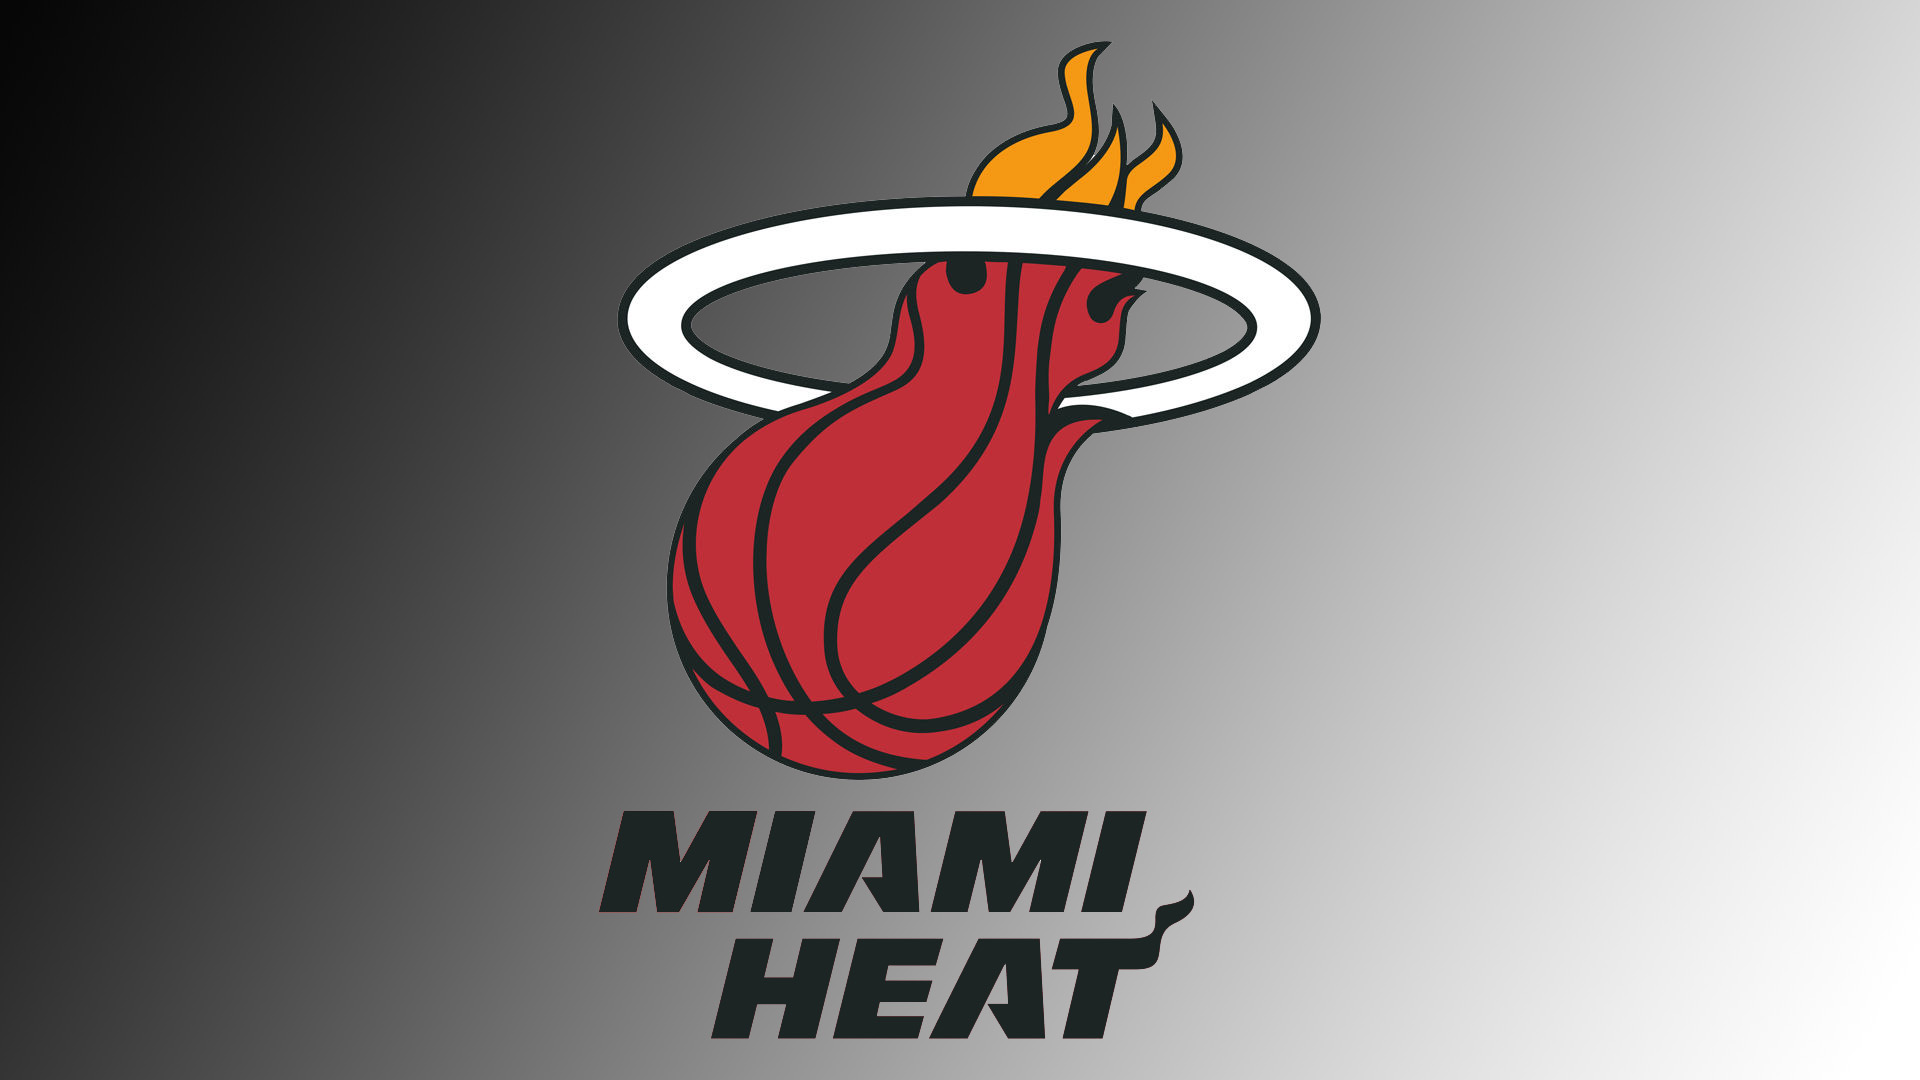 Miami Heat Logo Wallpaper HD - WallpaperSafari1920 x 1080